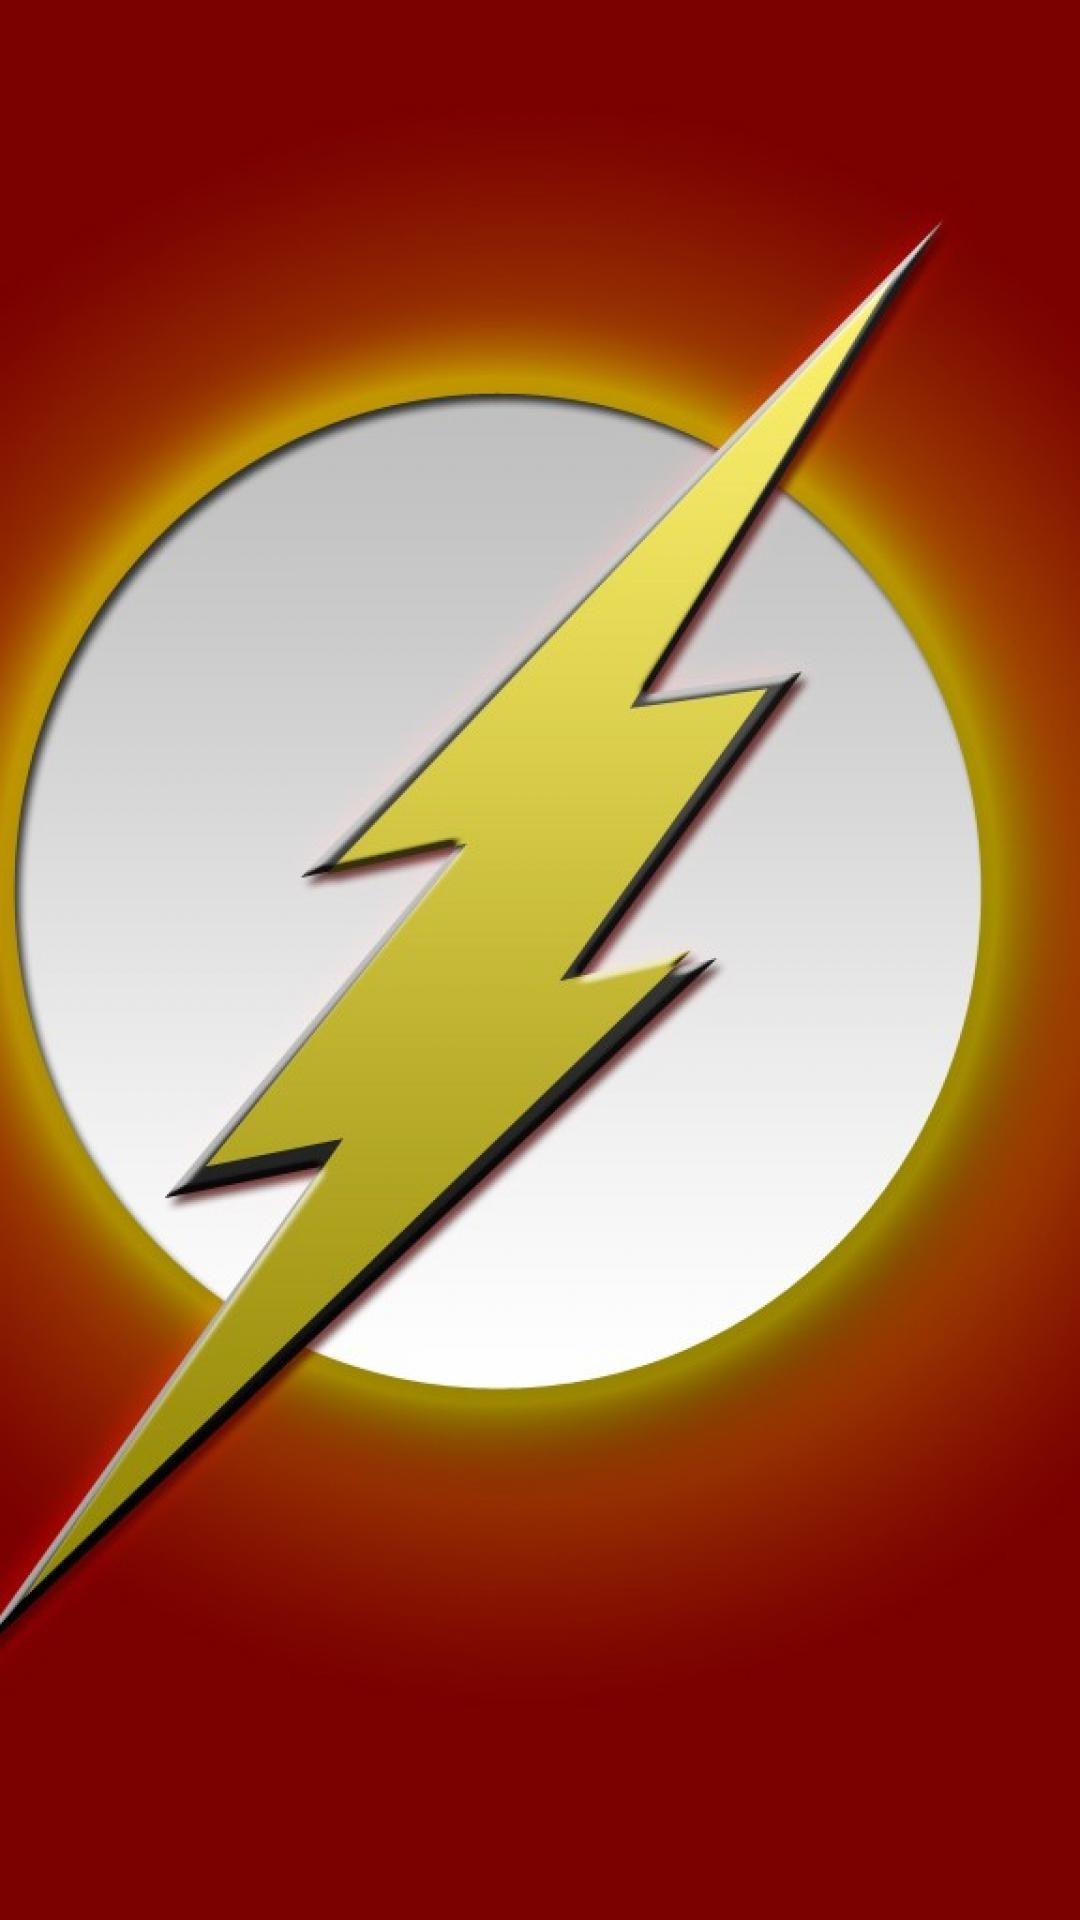 ScreenHeaven: DC Comics Flash (superhero) The Flash logos desktop